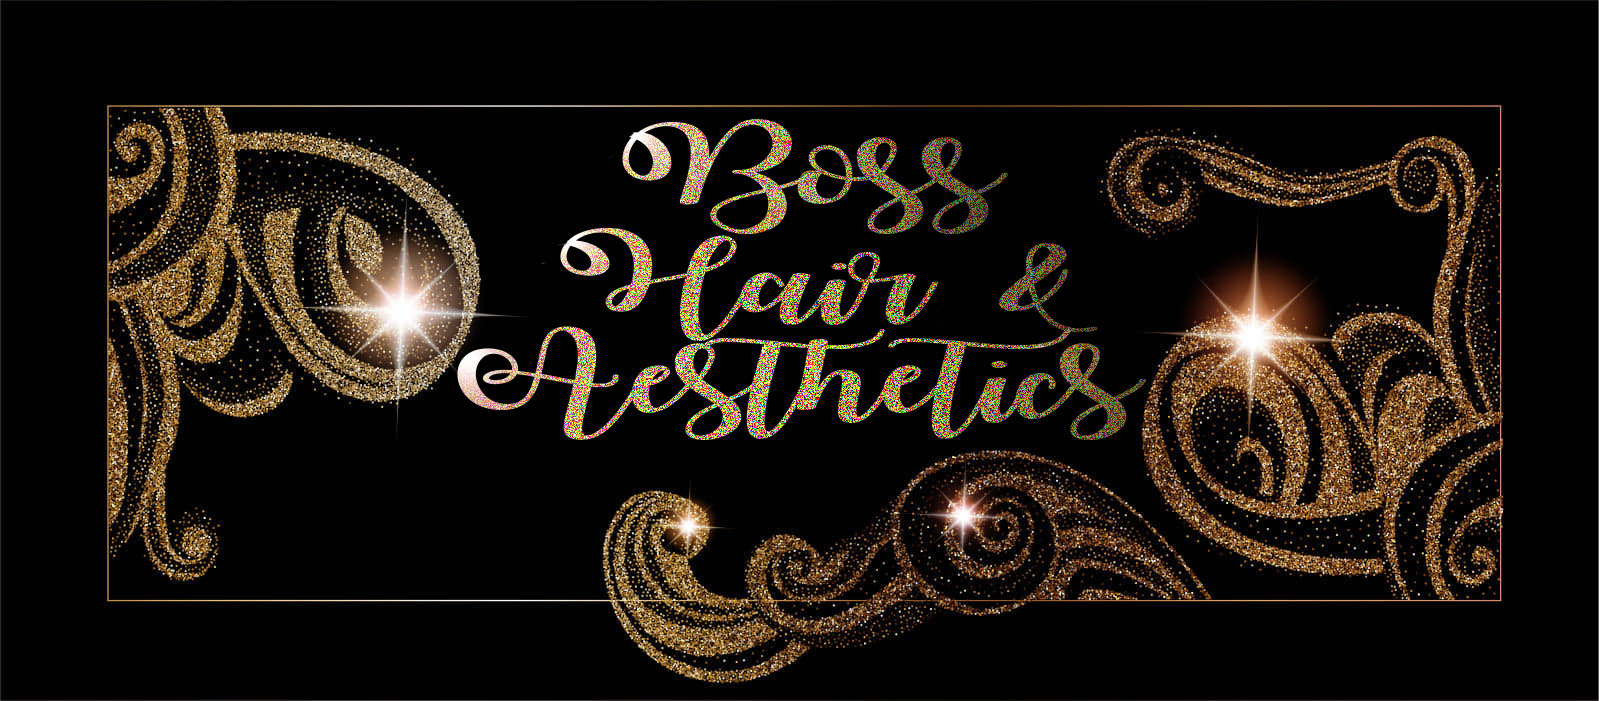 Boss Hair & Aesthetics